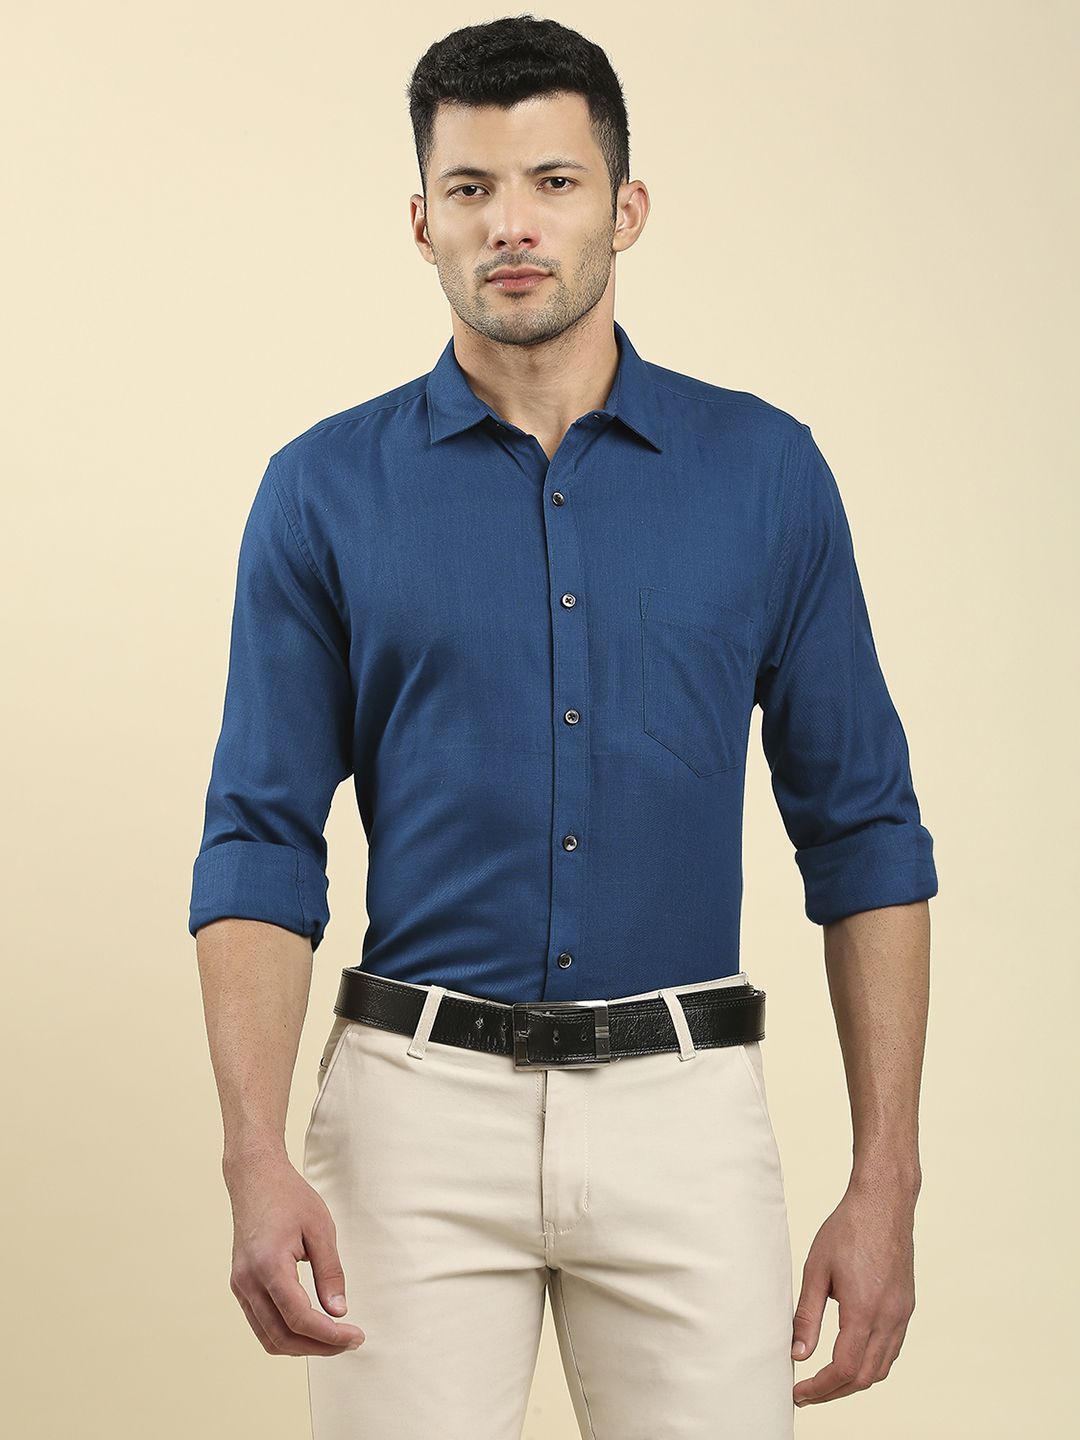 MANCREW Formal Pants for men - Formal Trousers Combo - Blue, Dark Grey